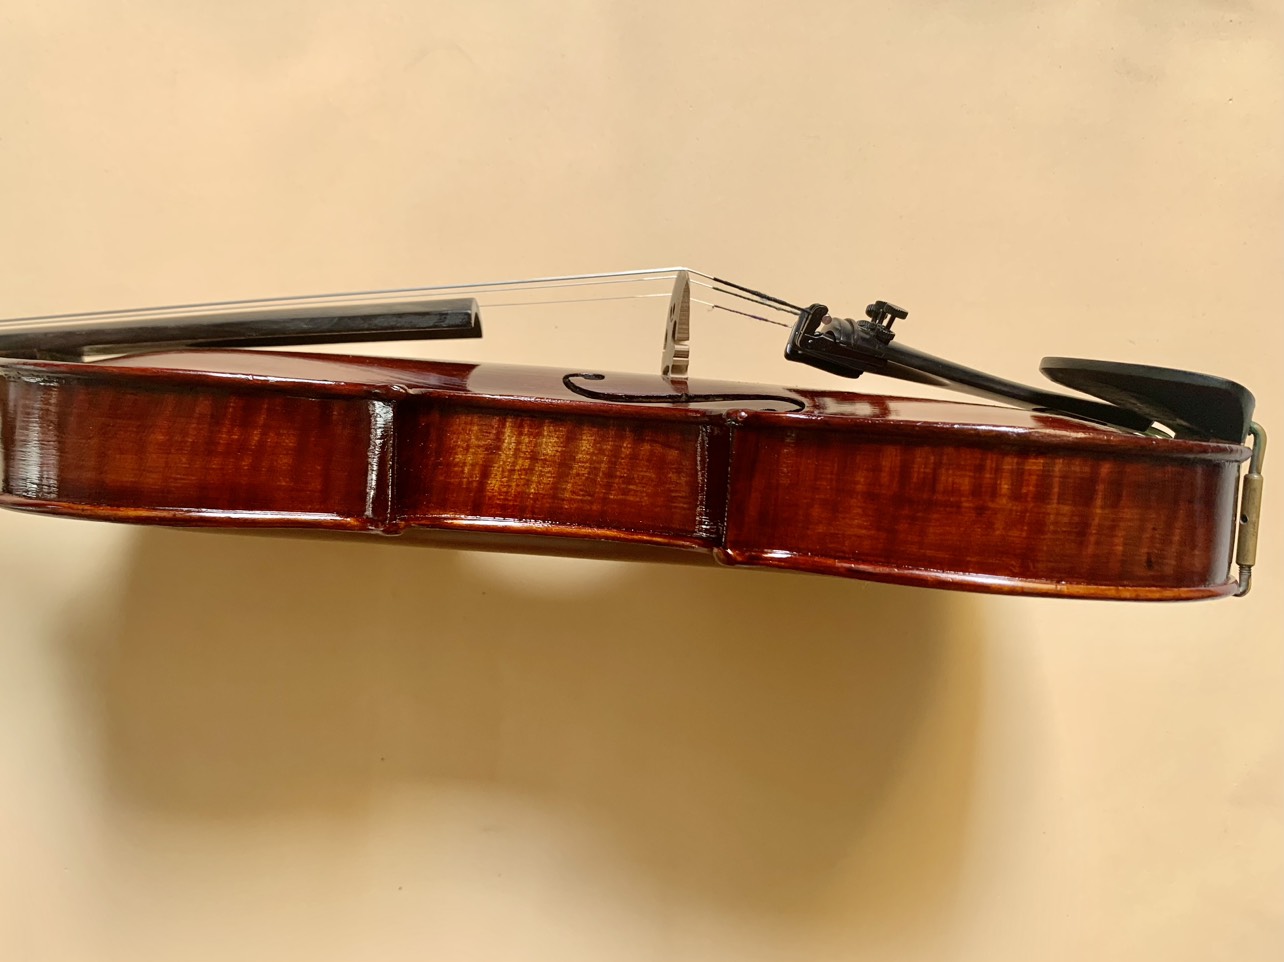 STAINER - Violin Chau Au -  Full size 4/4 